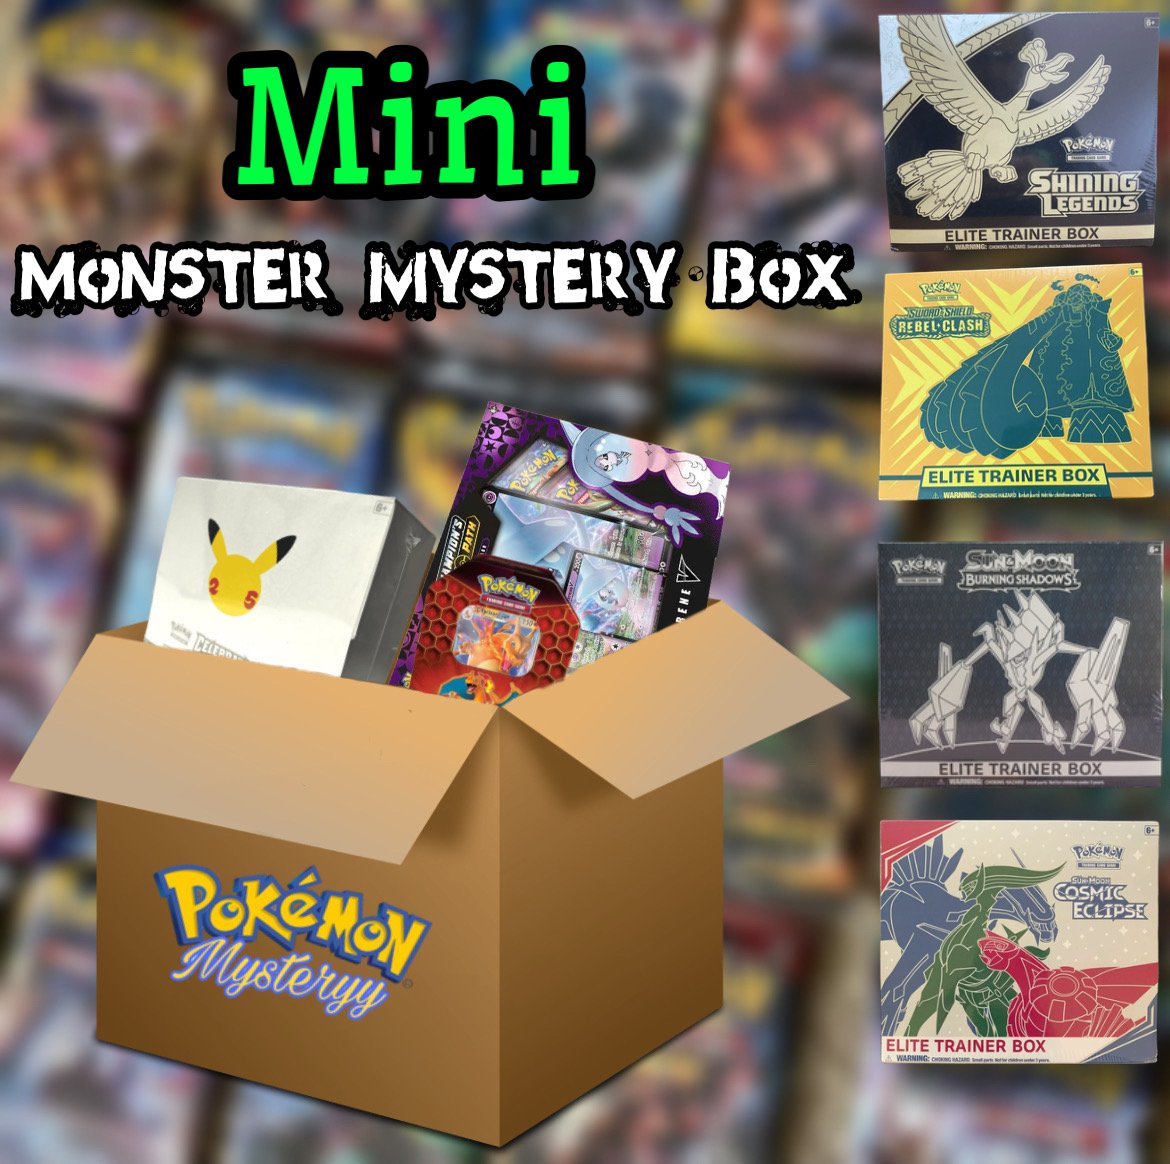 Mystery Box Mystery Box 250.00